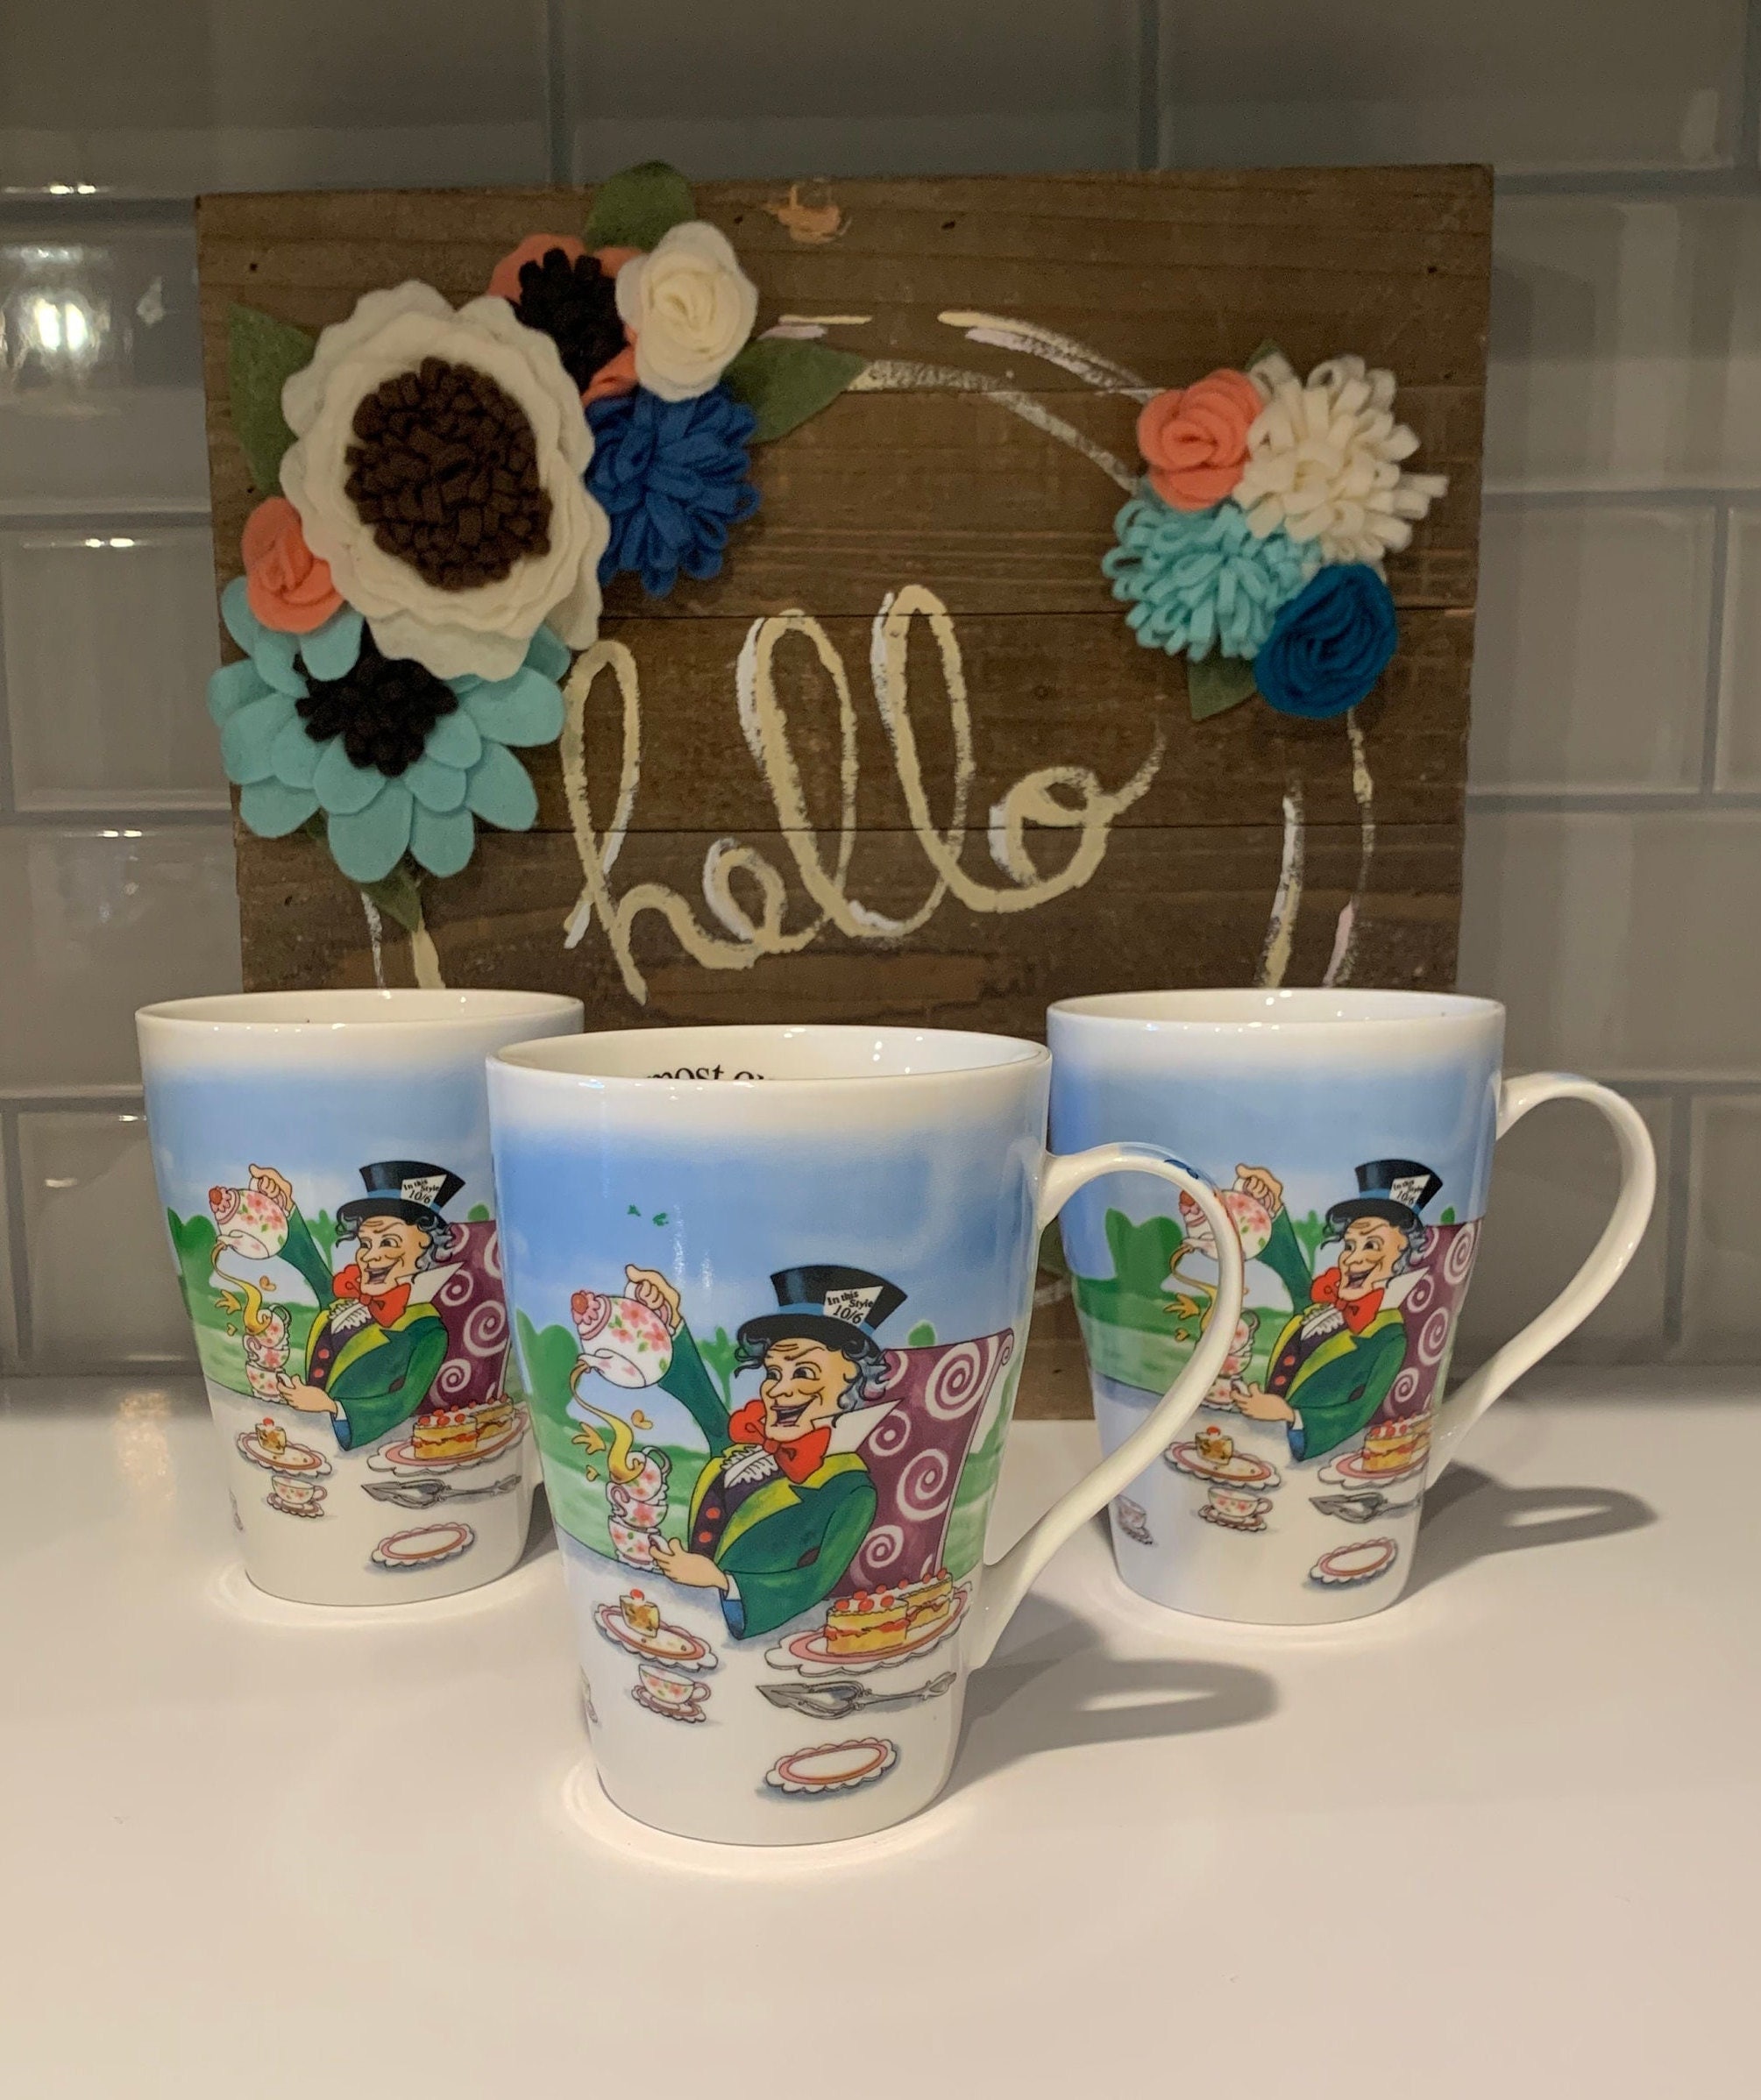 Le Chat Noir Boutique: Alice in Wonderland Paul Cardew Coffee Mug + Coaster  in Tin Can, Coffee Mugs, CMAliceinWonderlandPaulCardew